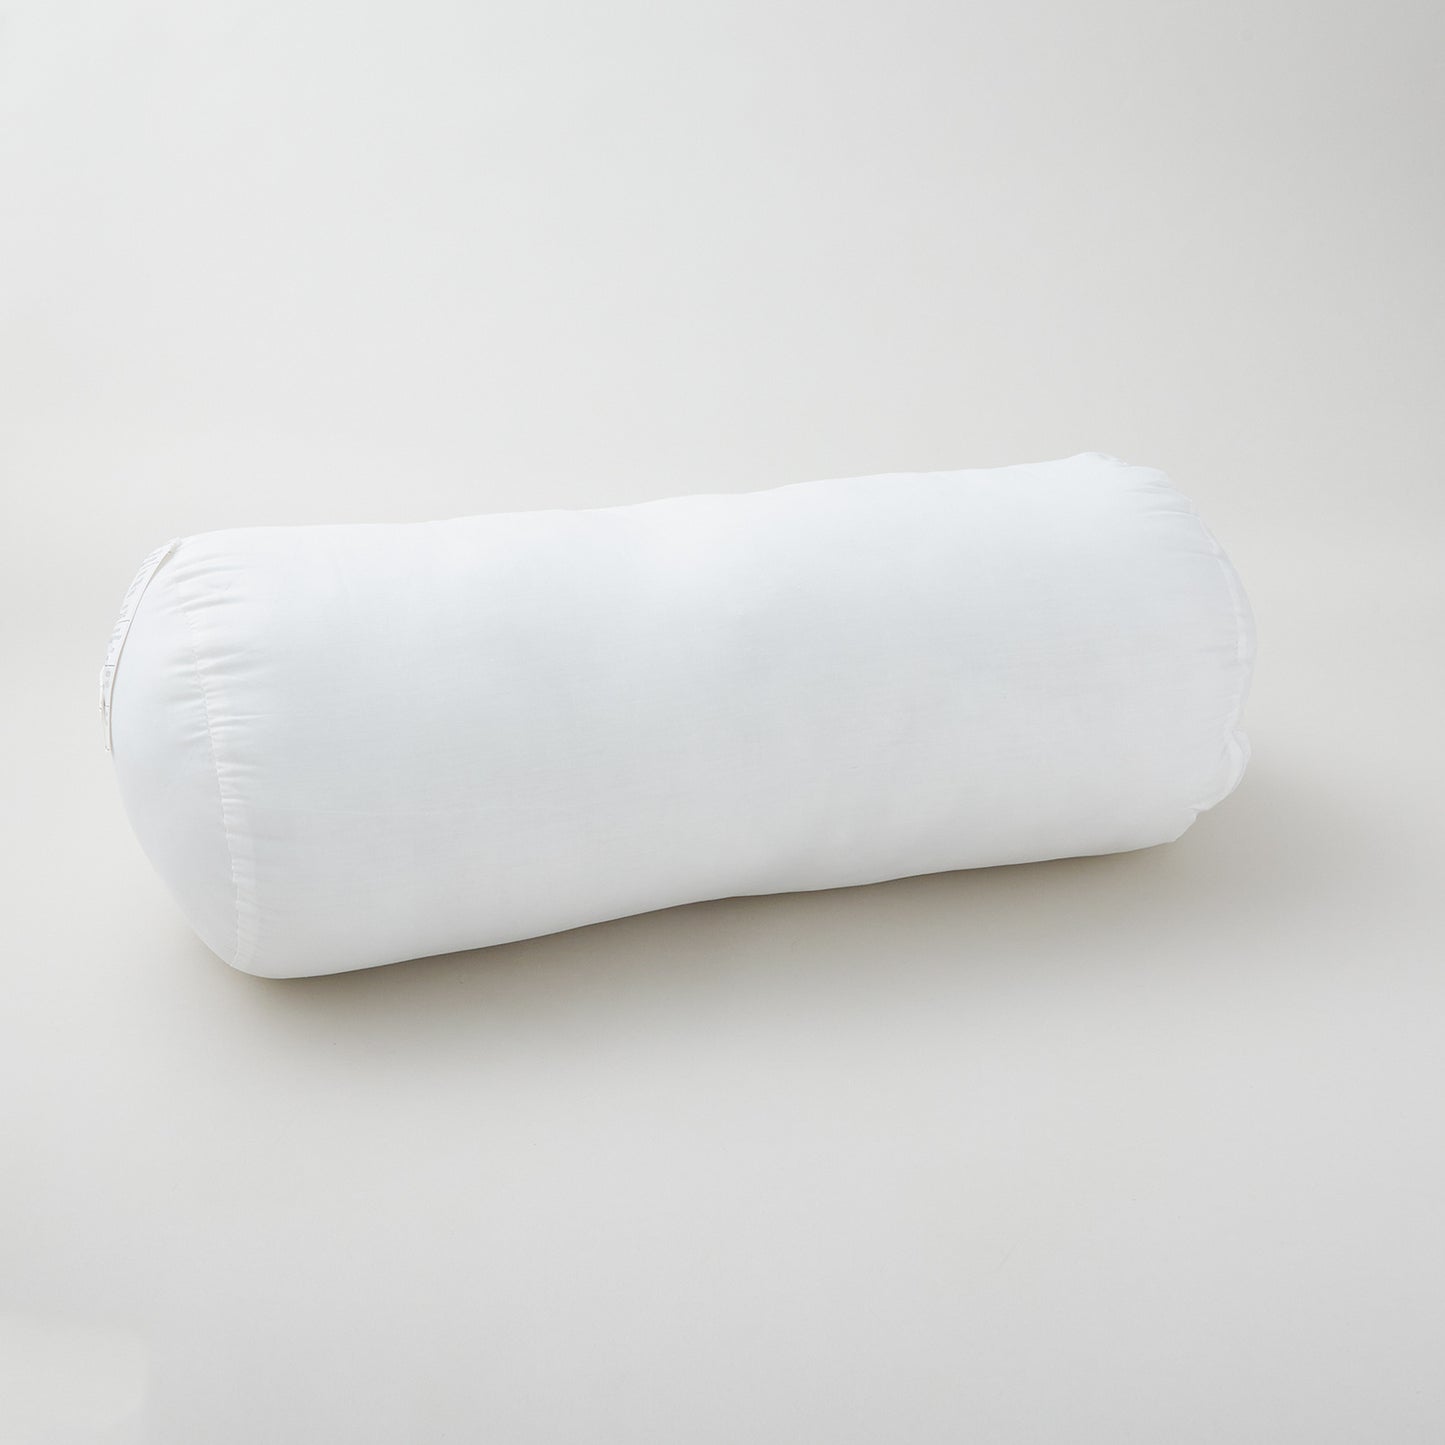 Soft Touch Neck Roll Pillow - 9" x 20" Alternative View #1